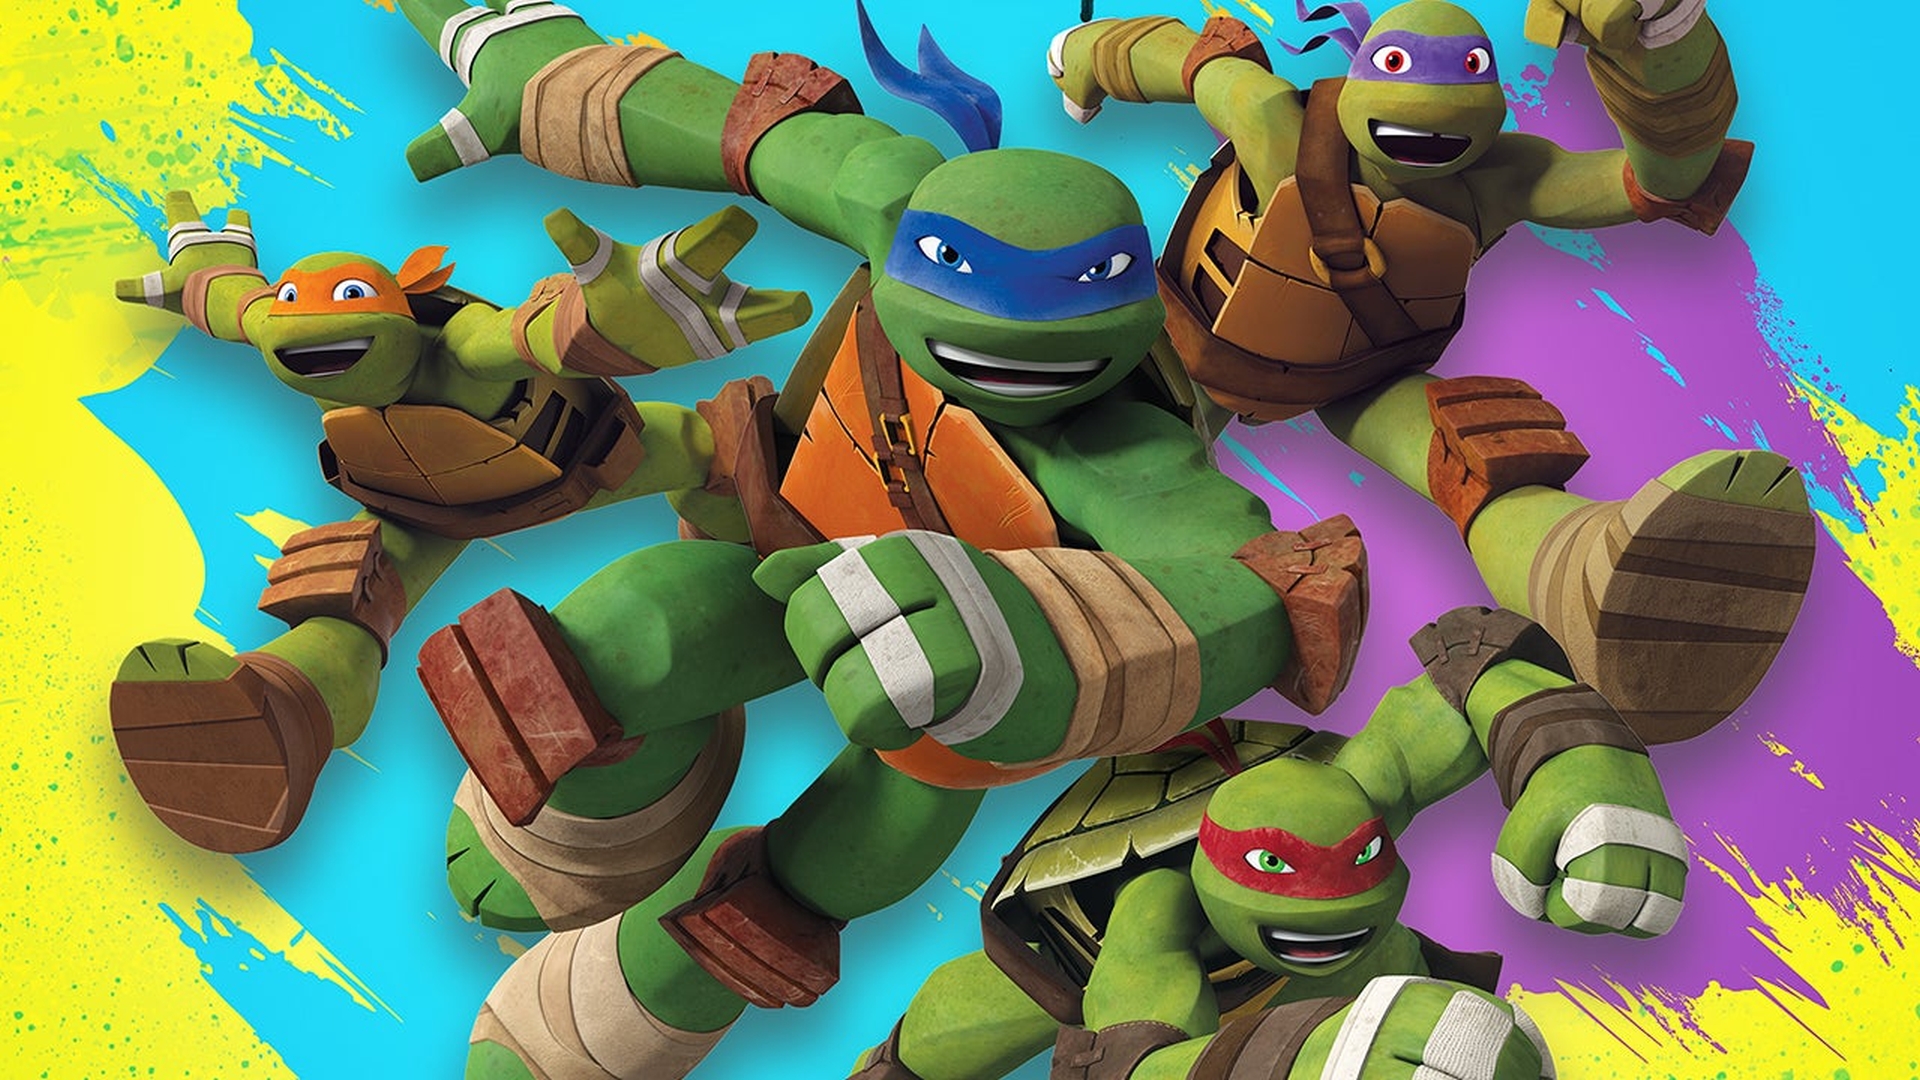 L'uscita di Teenage Mutant Ninja Turtles Arcade: L'ira dei mutanti in arrivo sarà distribuito il 23 aprile.